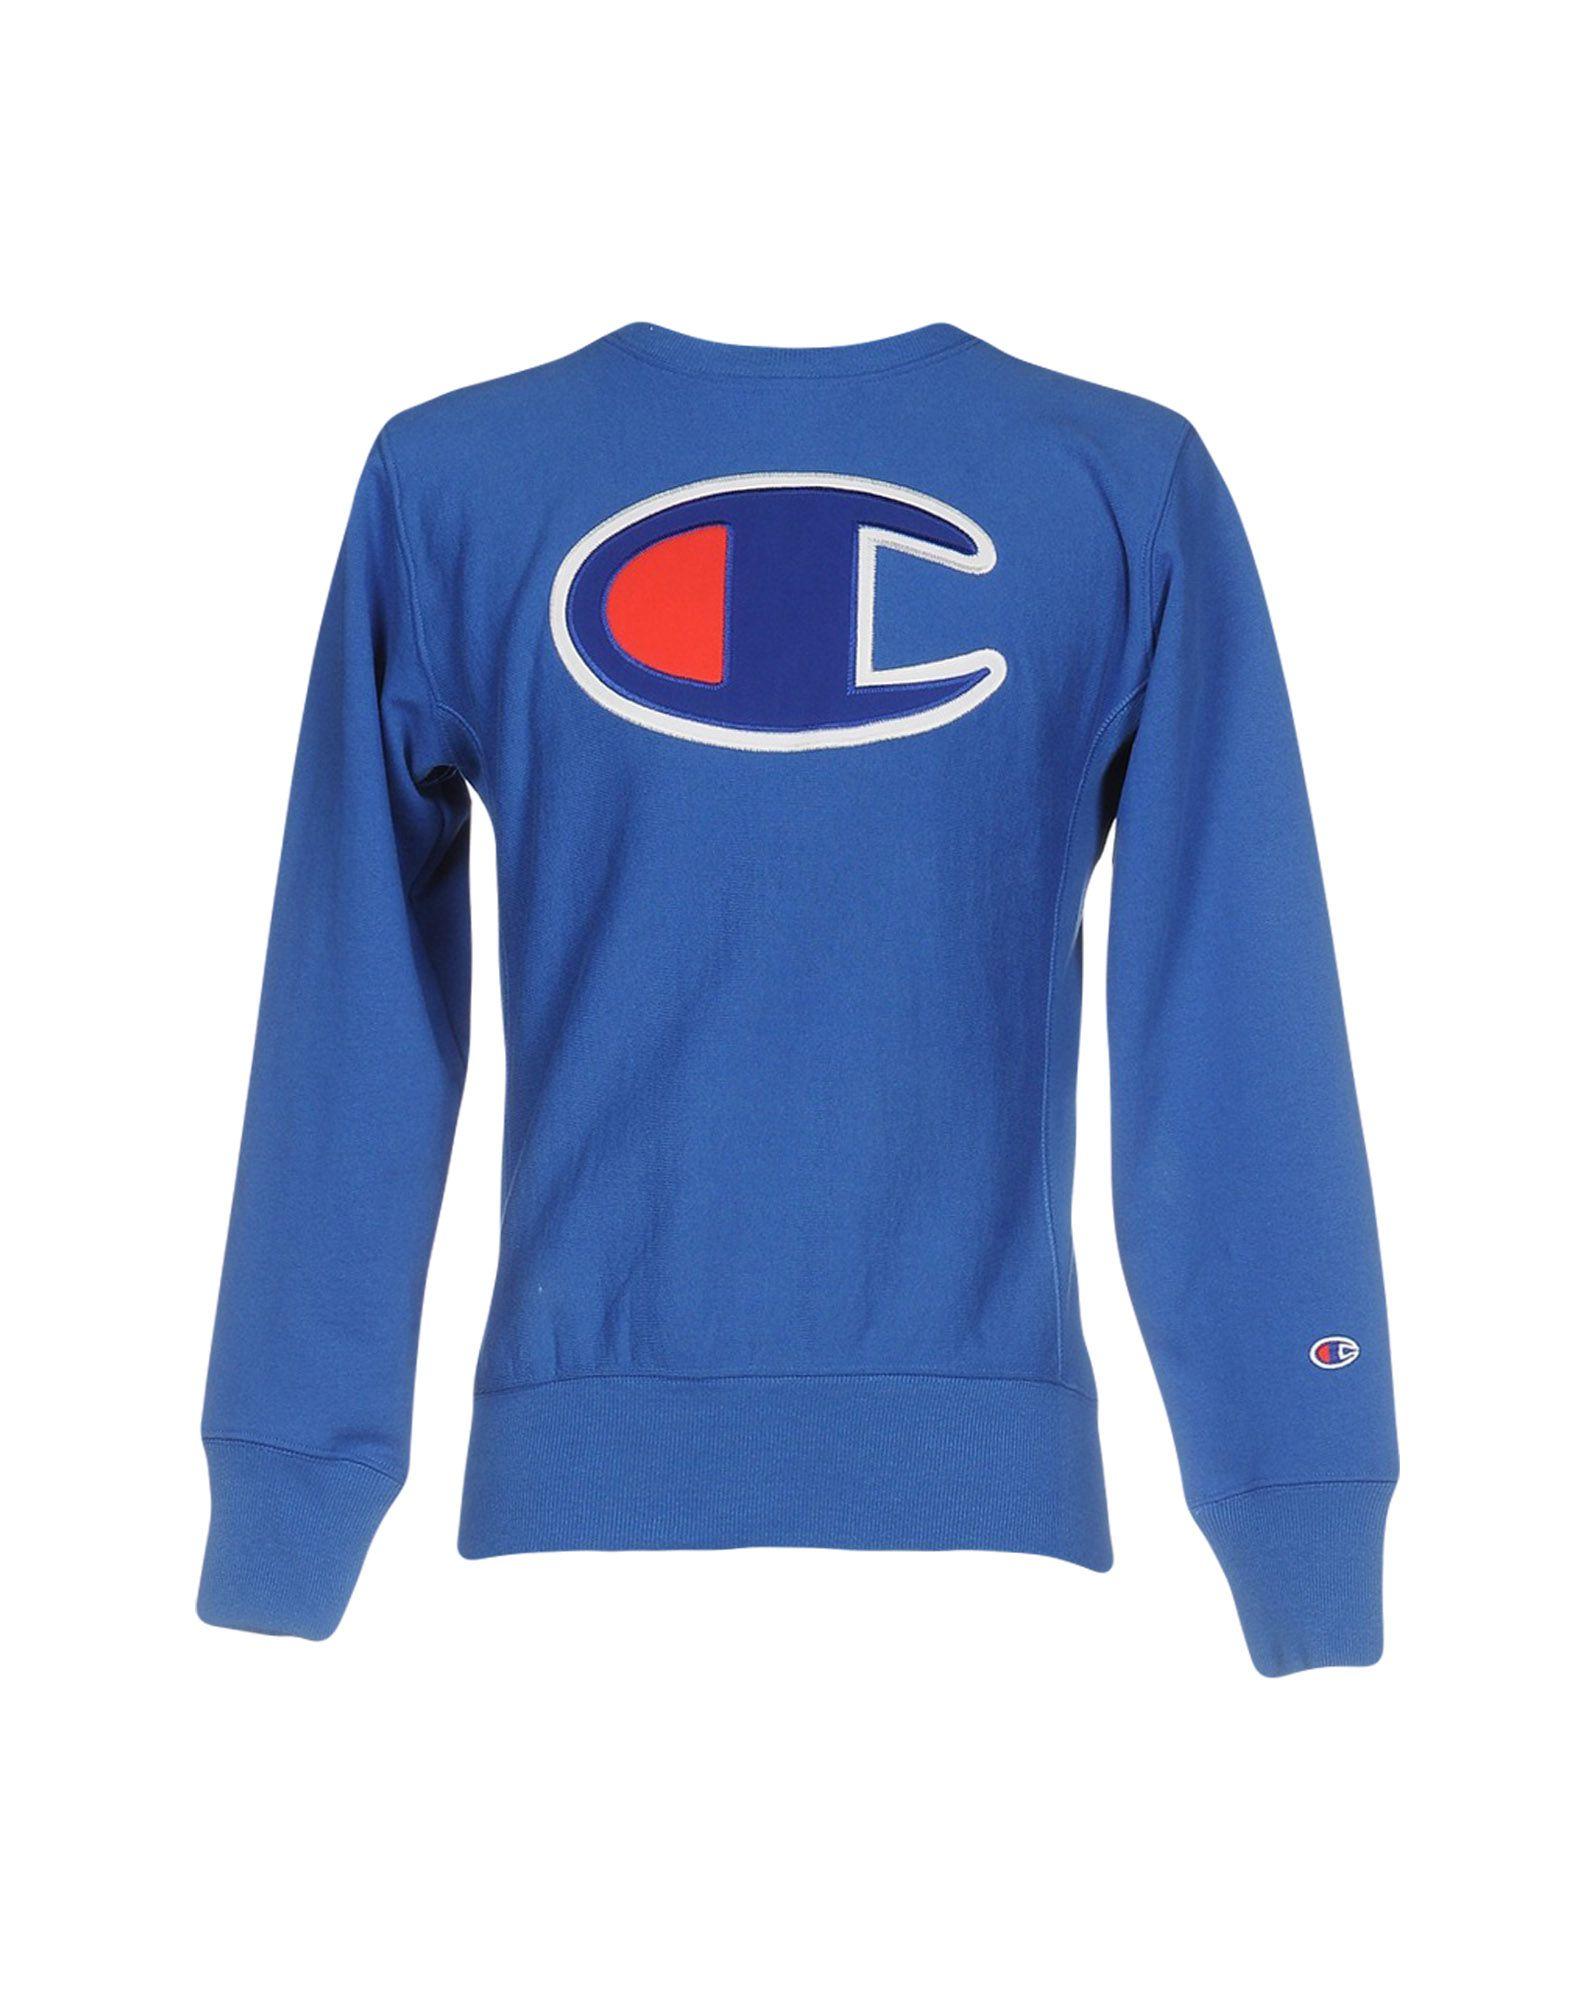 Lyst - Champion Sweatshirt in Blue for Men